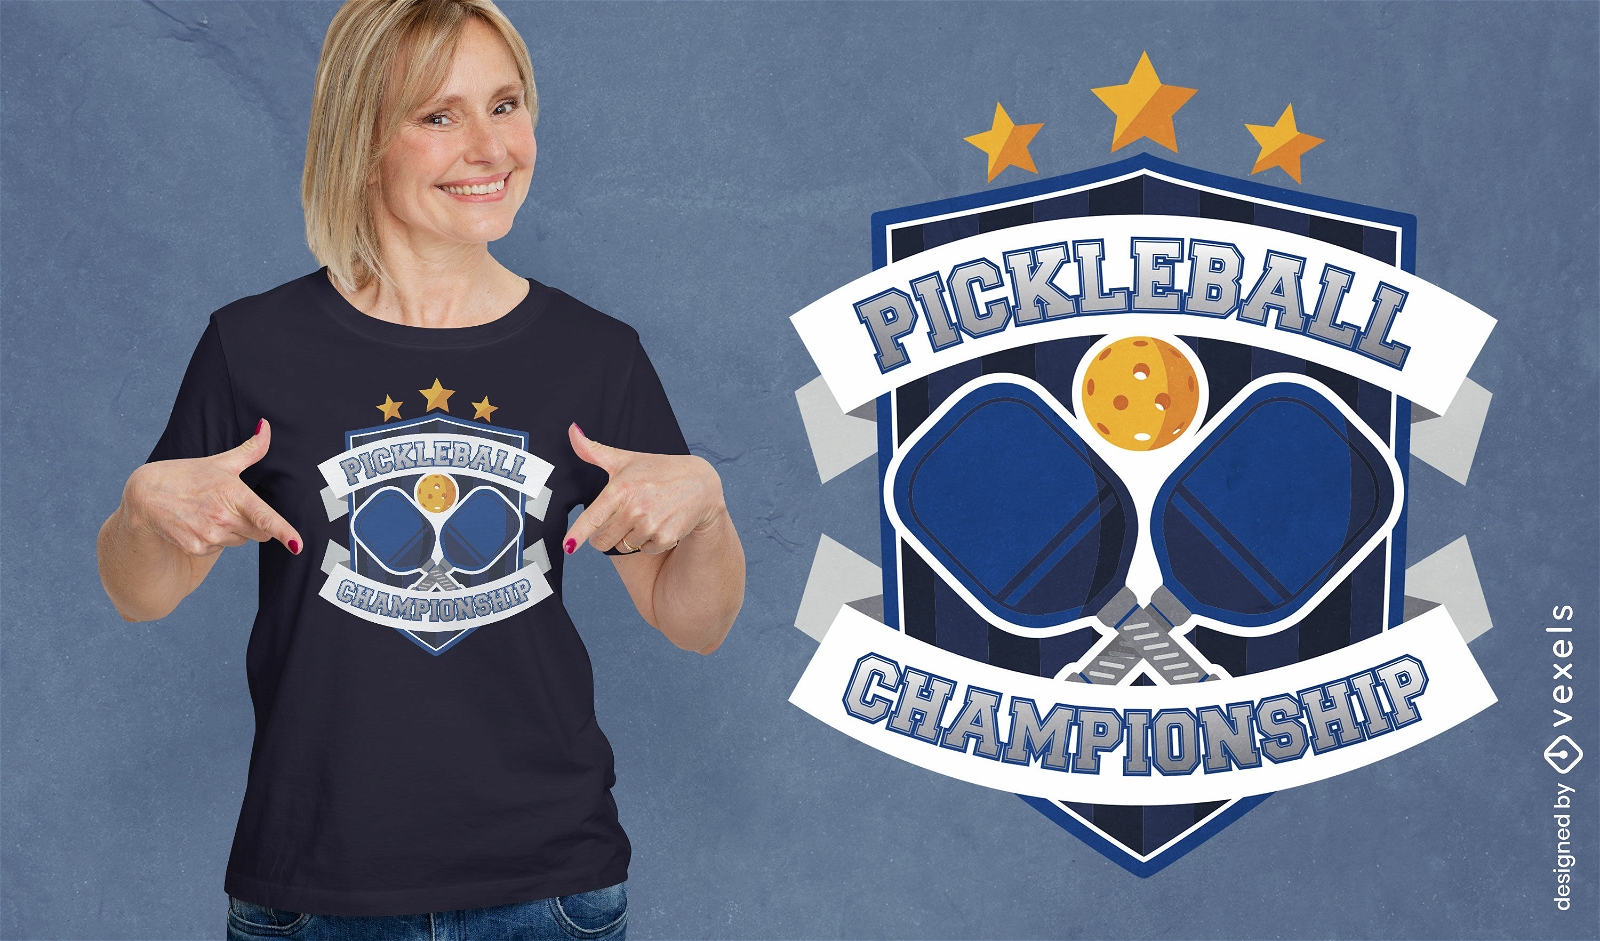 Dise?o de camiseta de campeones de Pickleball.